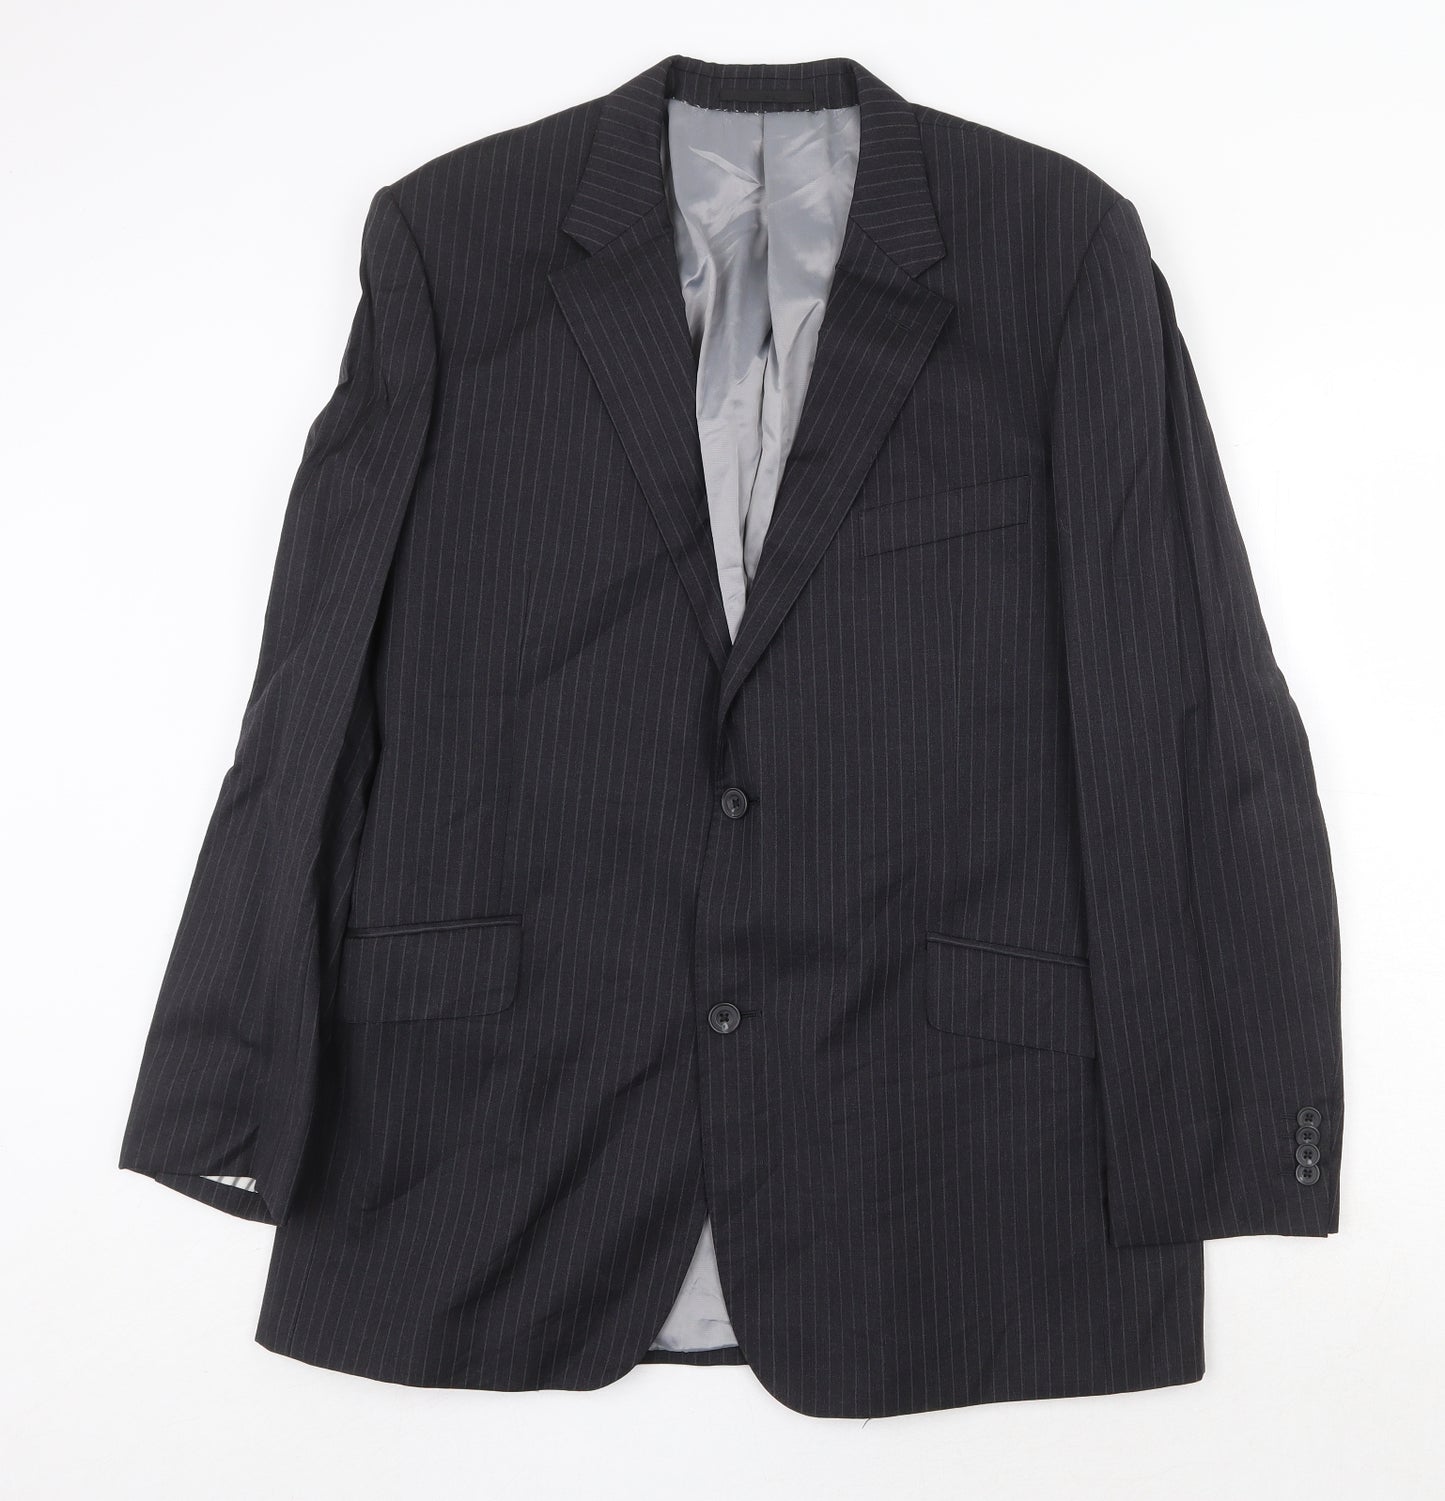 T.M.Lewin Mens Grey Striped Wool Jacket Suit Jacket Size 44 Regular